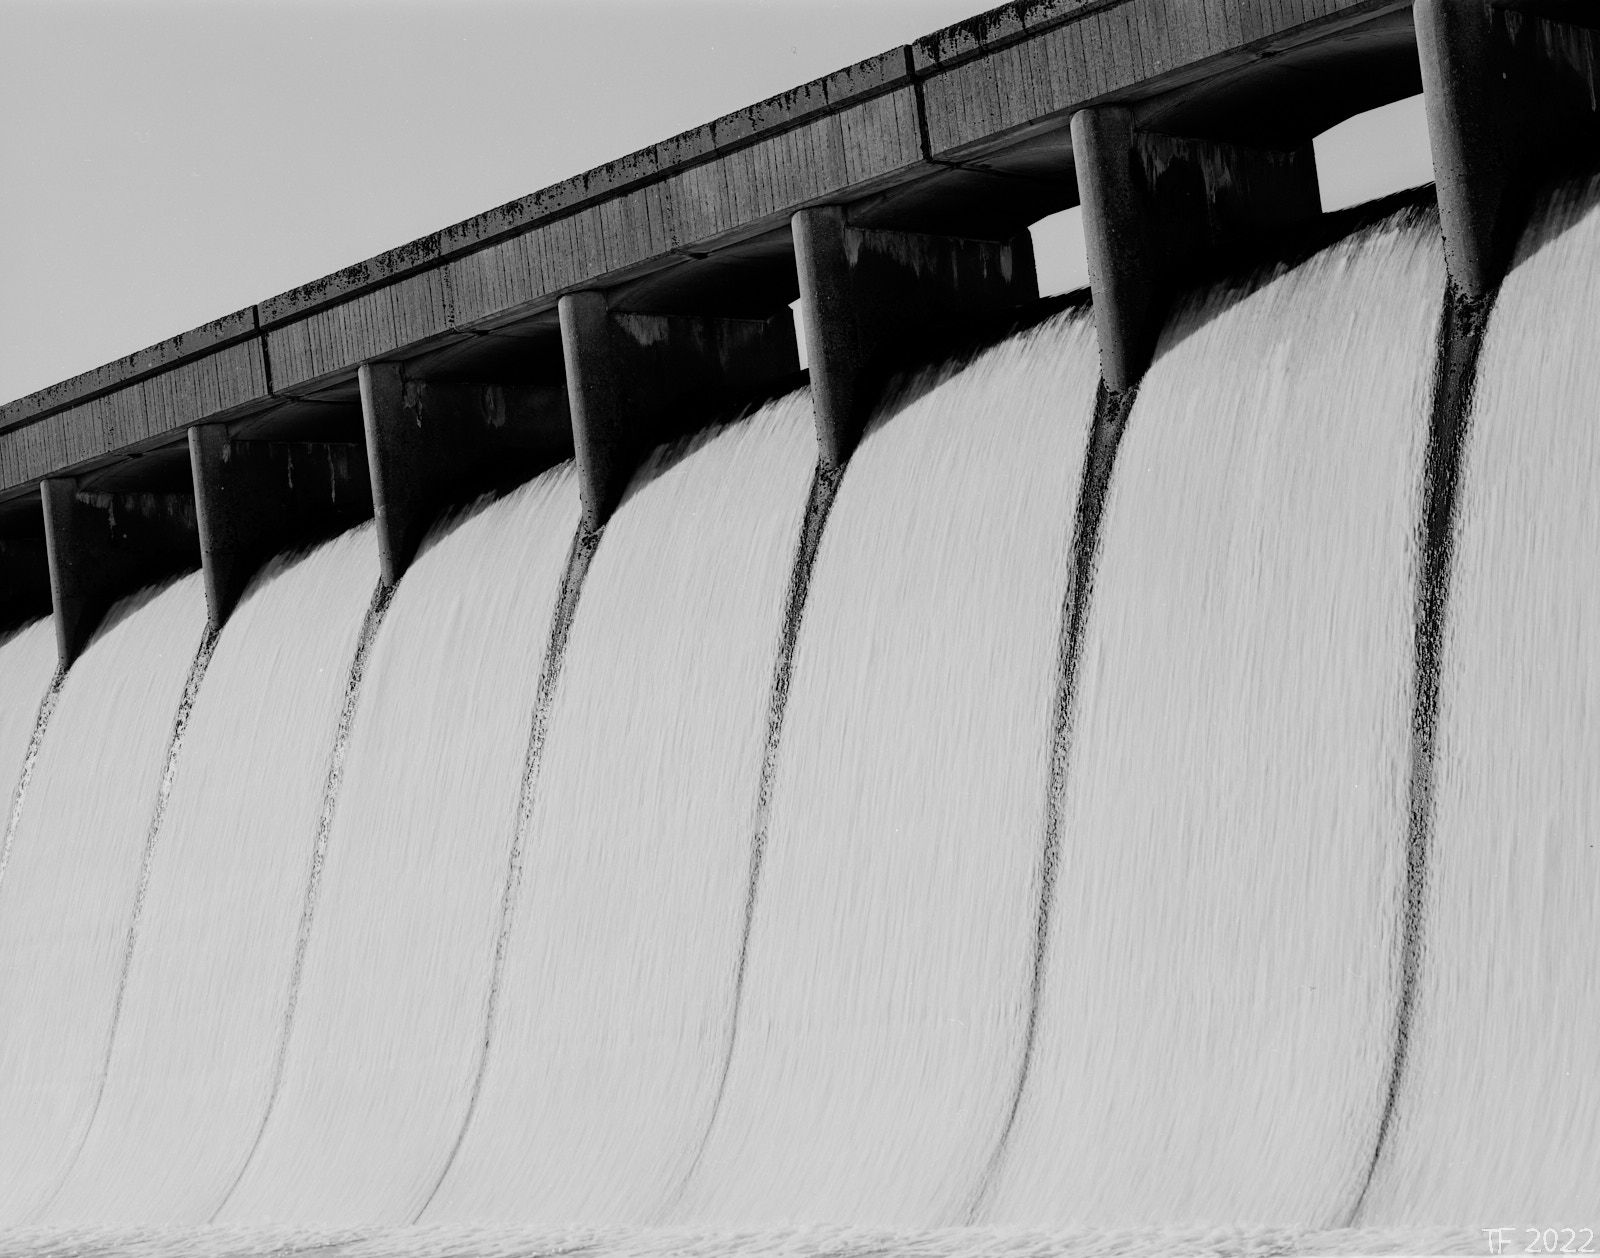 Below the Dam